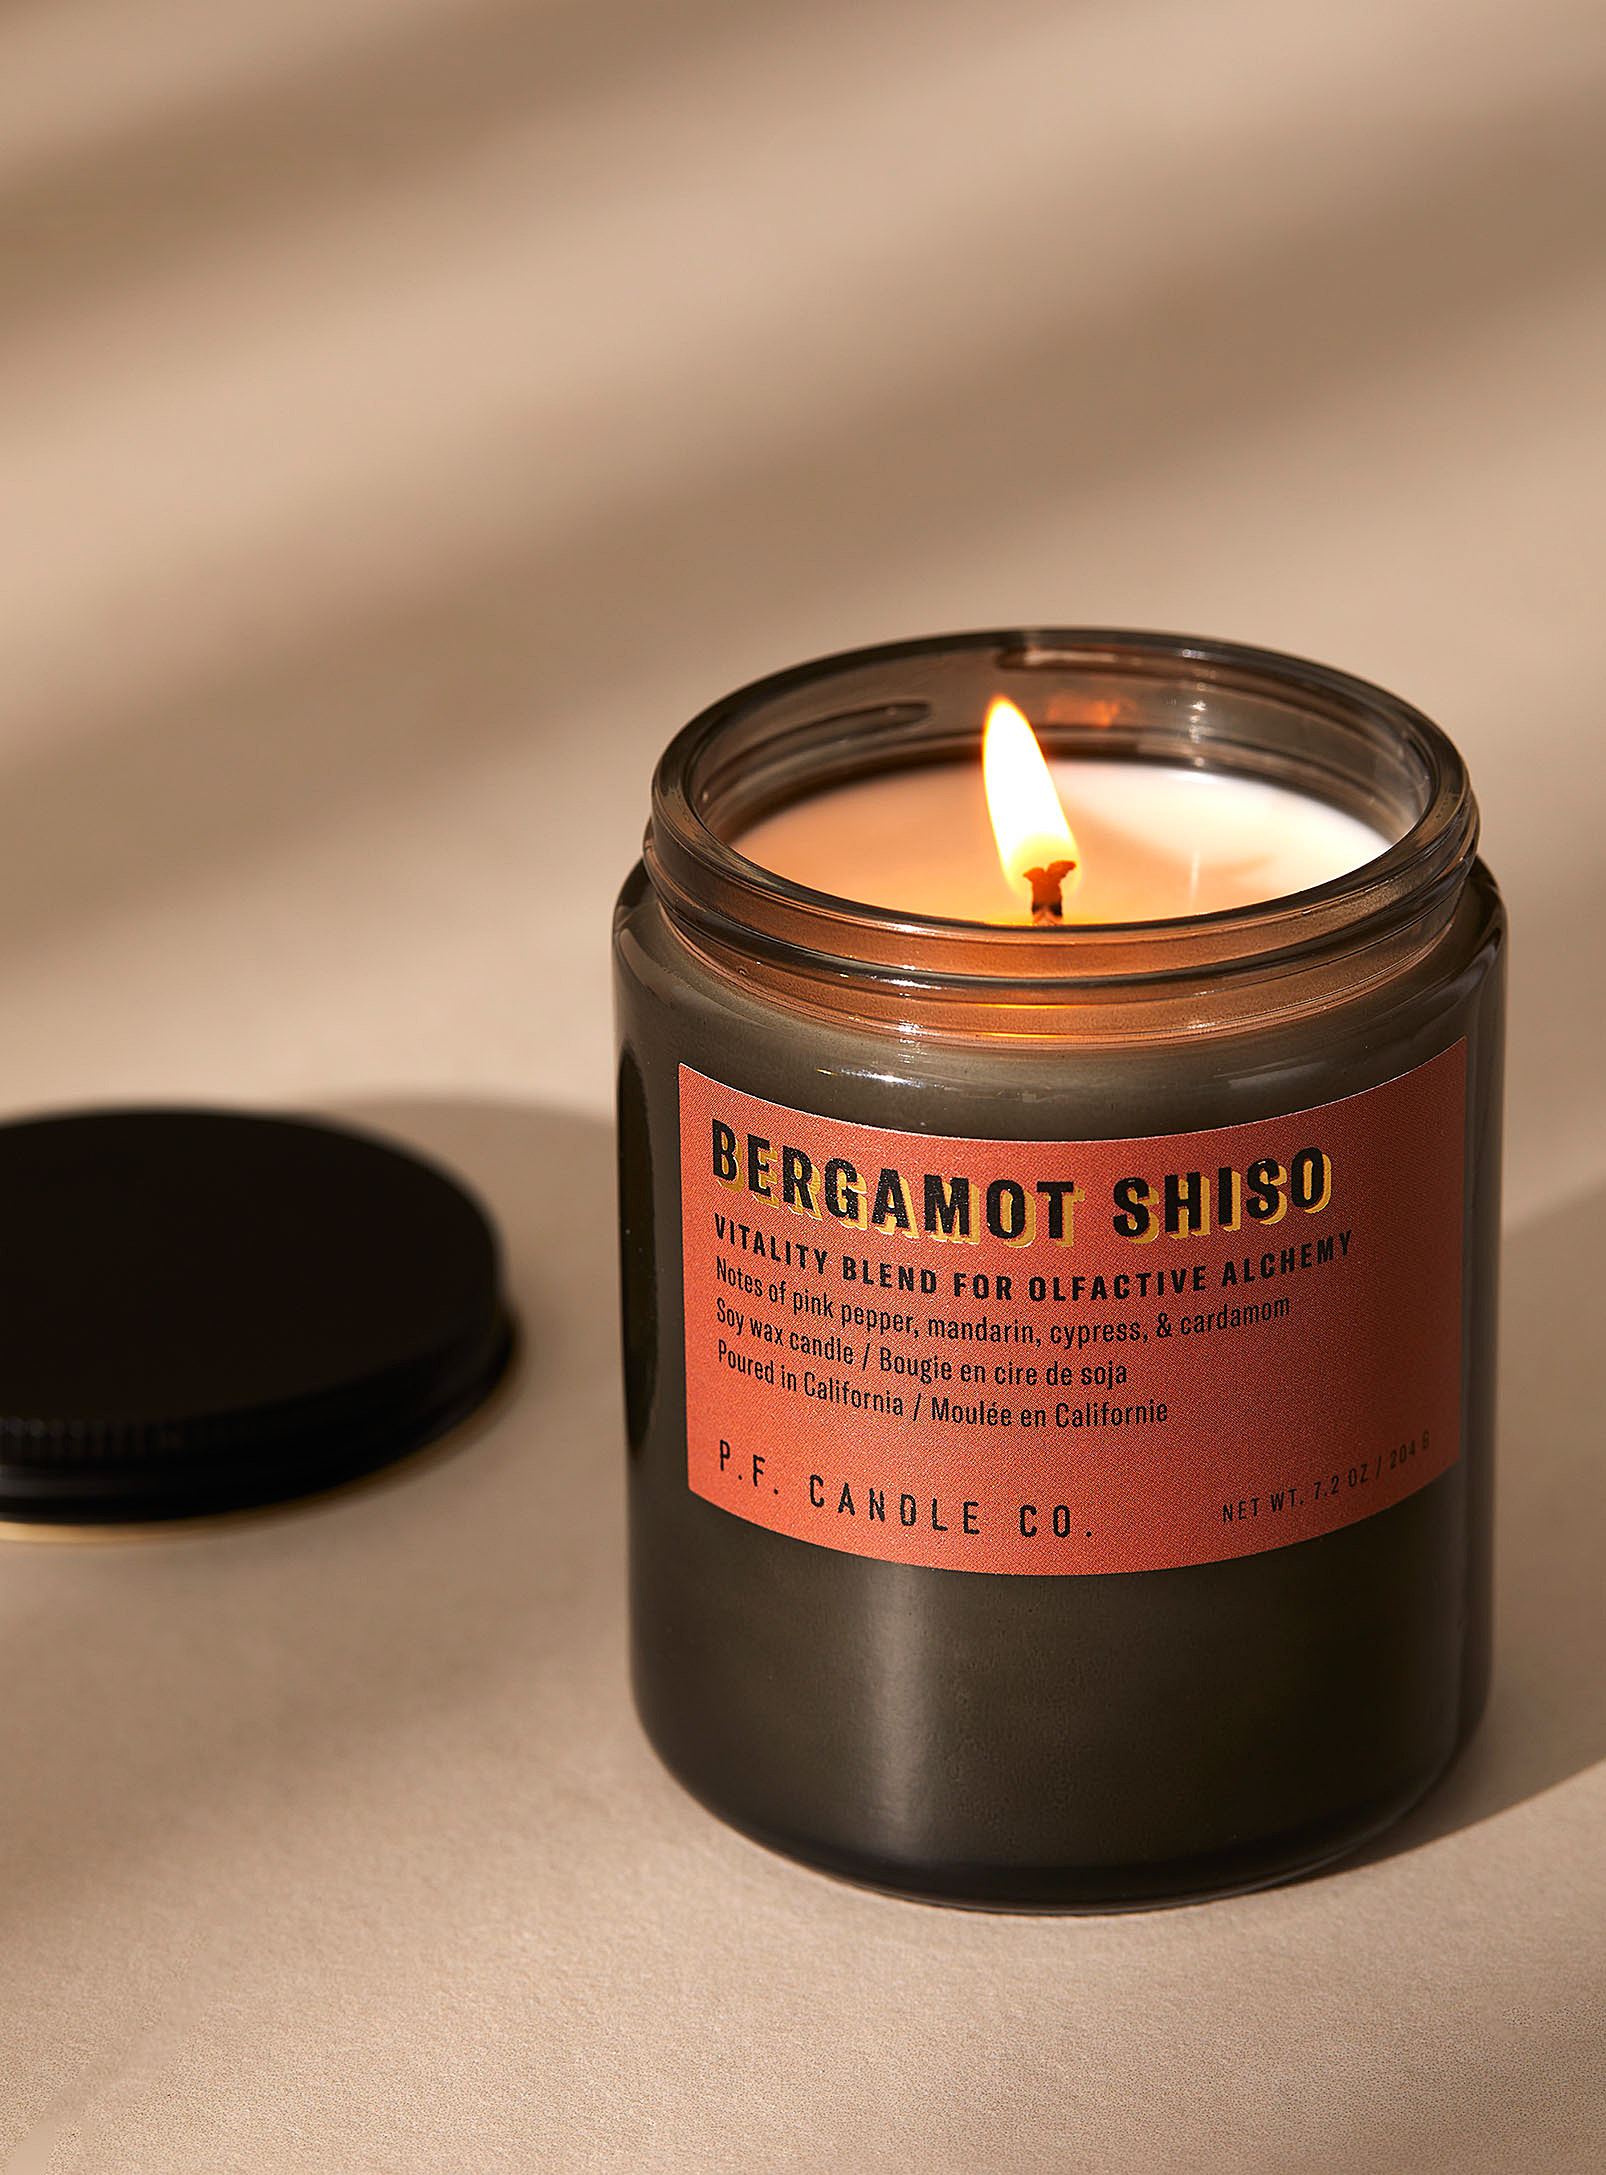 P.F. Candle Co. - Bergamot shiso candle